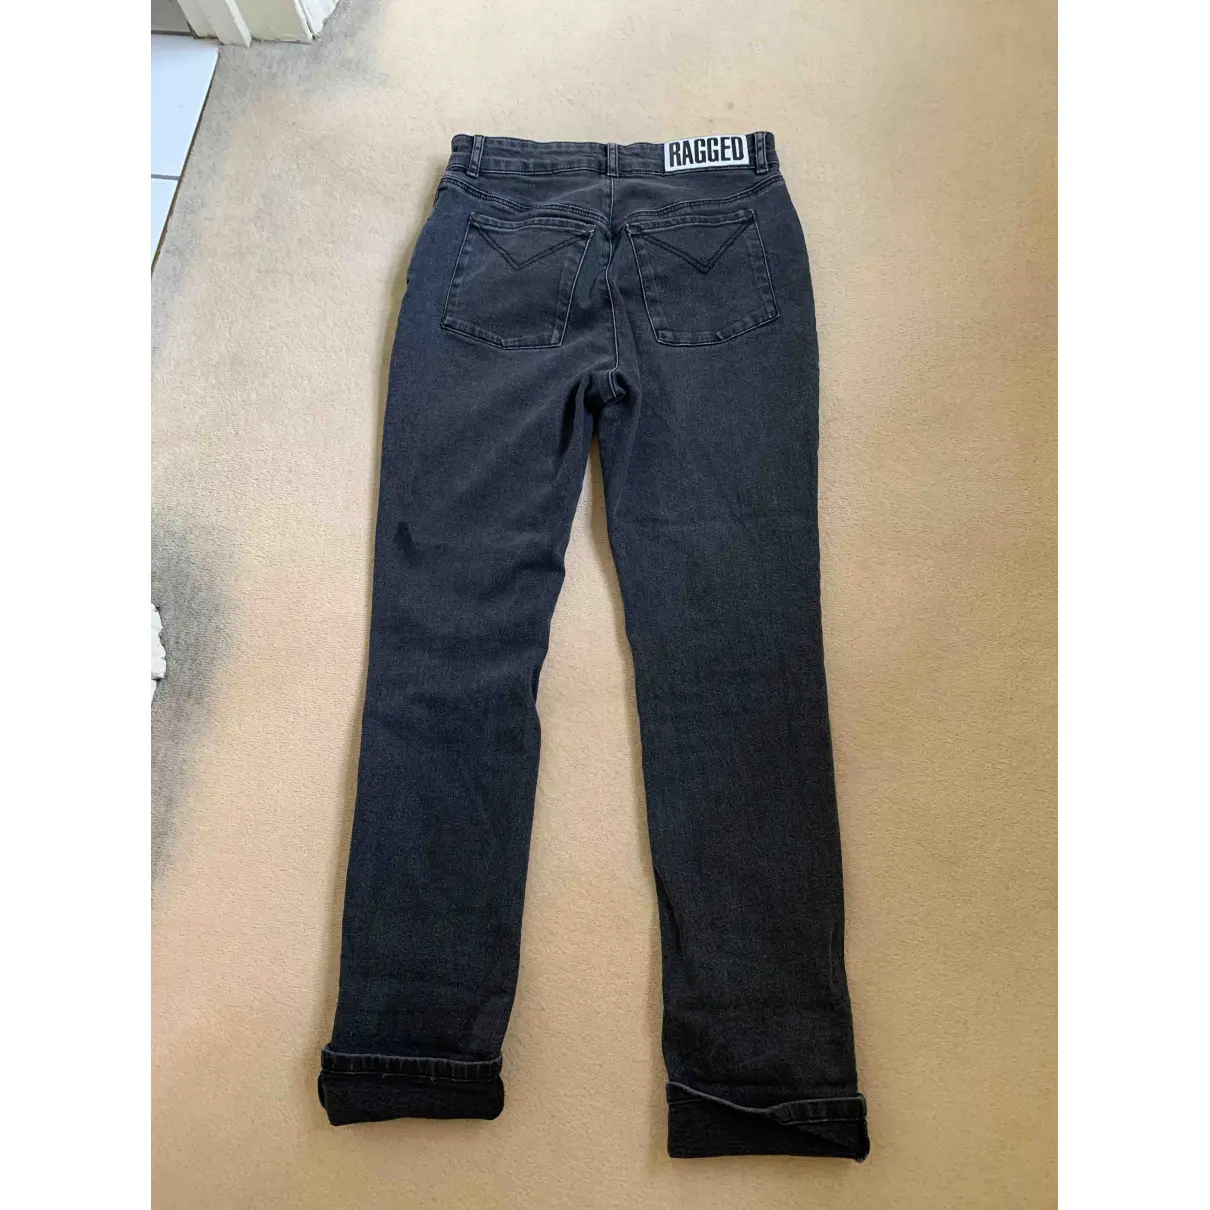 Buy The Ragged Priest Grey Denim - Jeans Jeans online